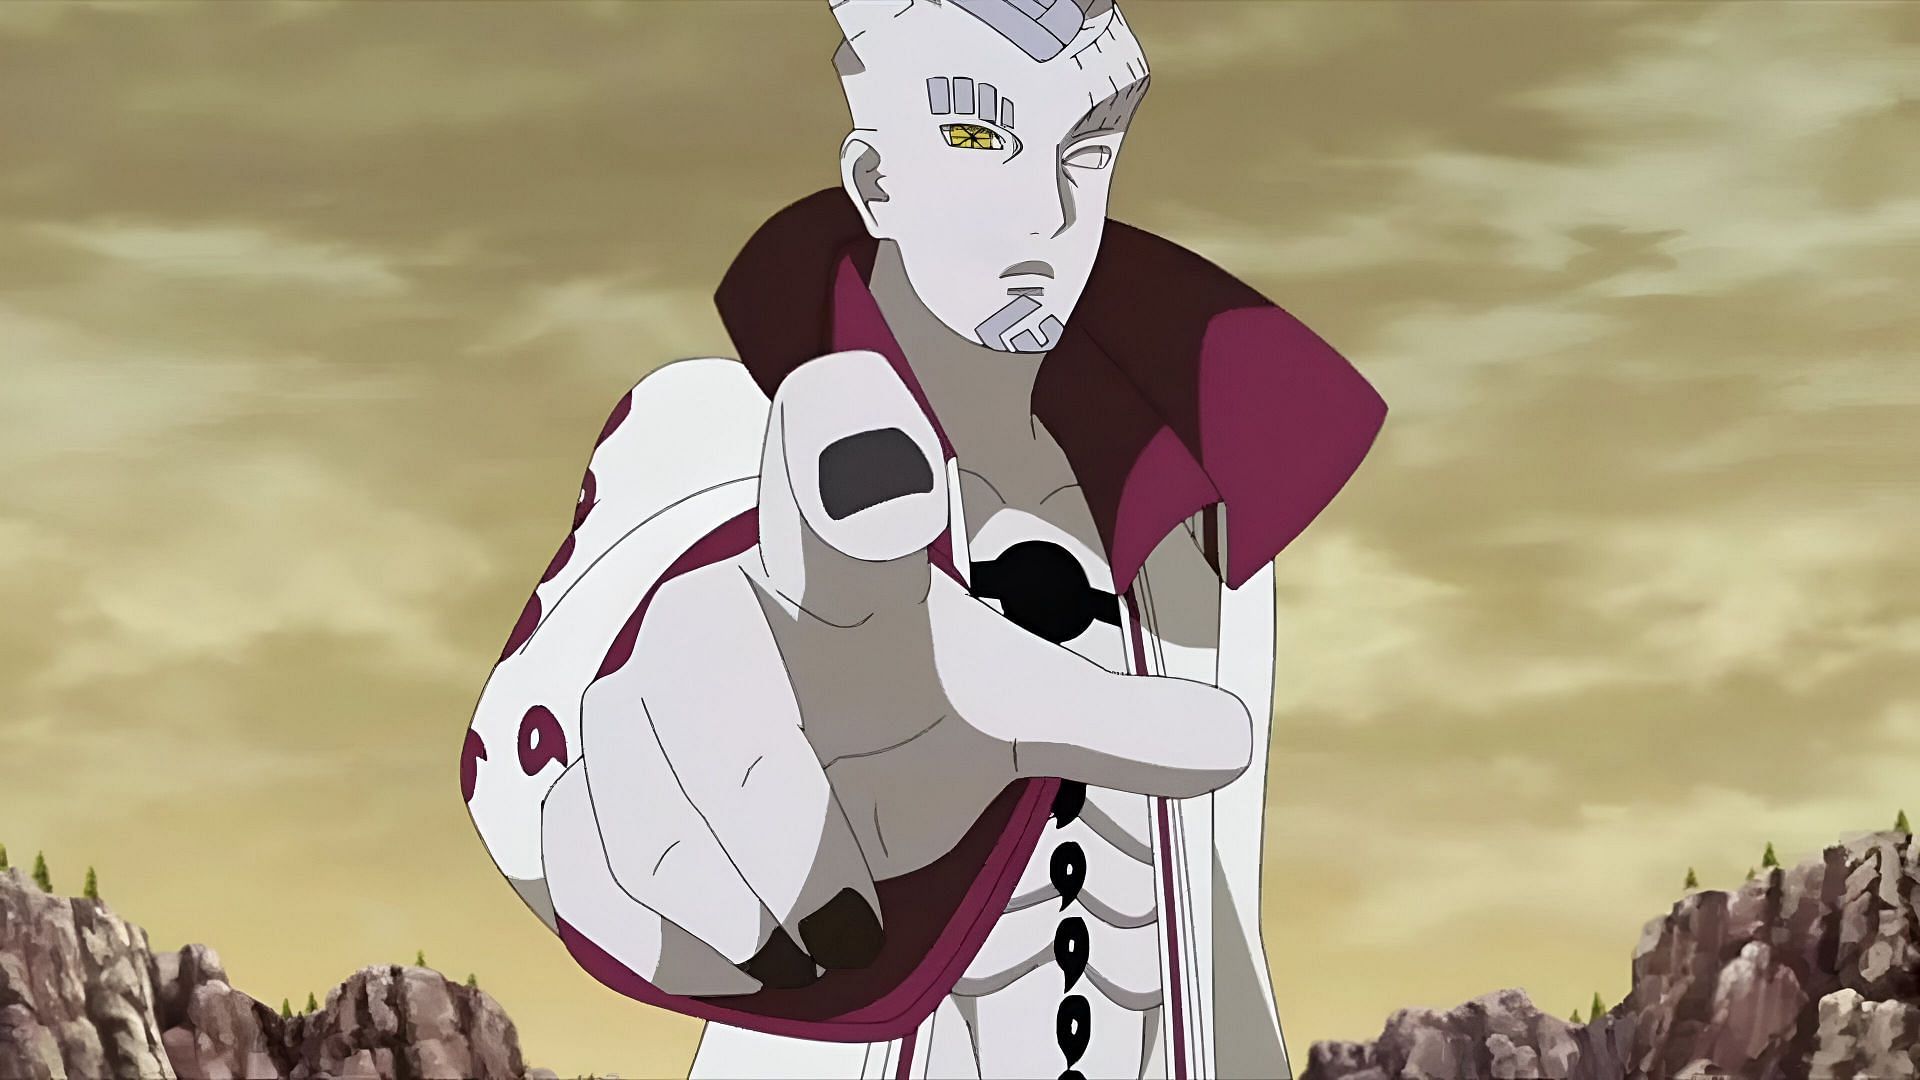 Isshiki as seen in the anime (Image via Studio Pierrot)